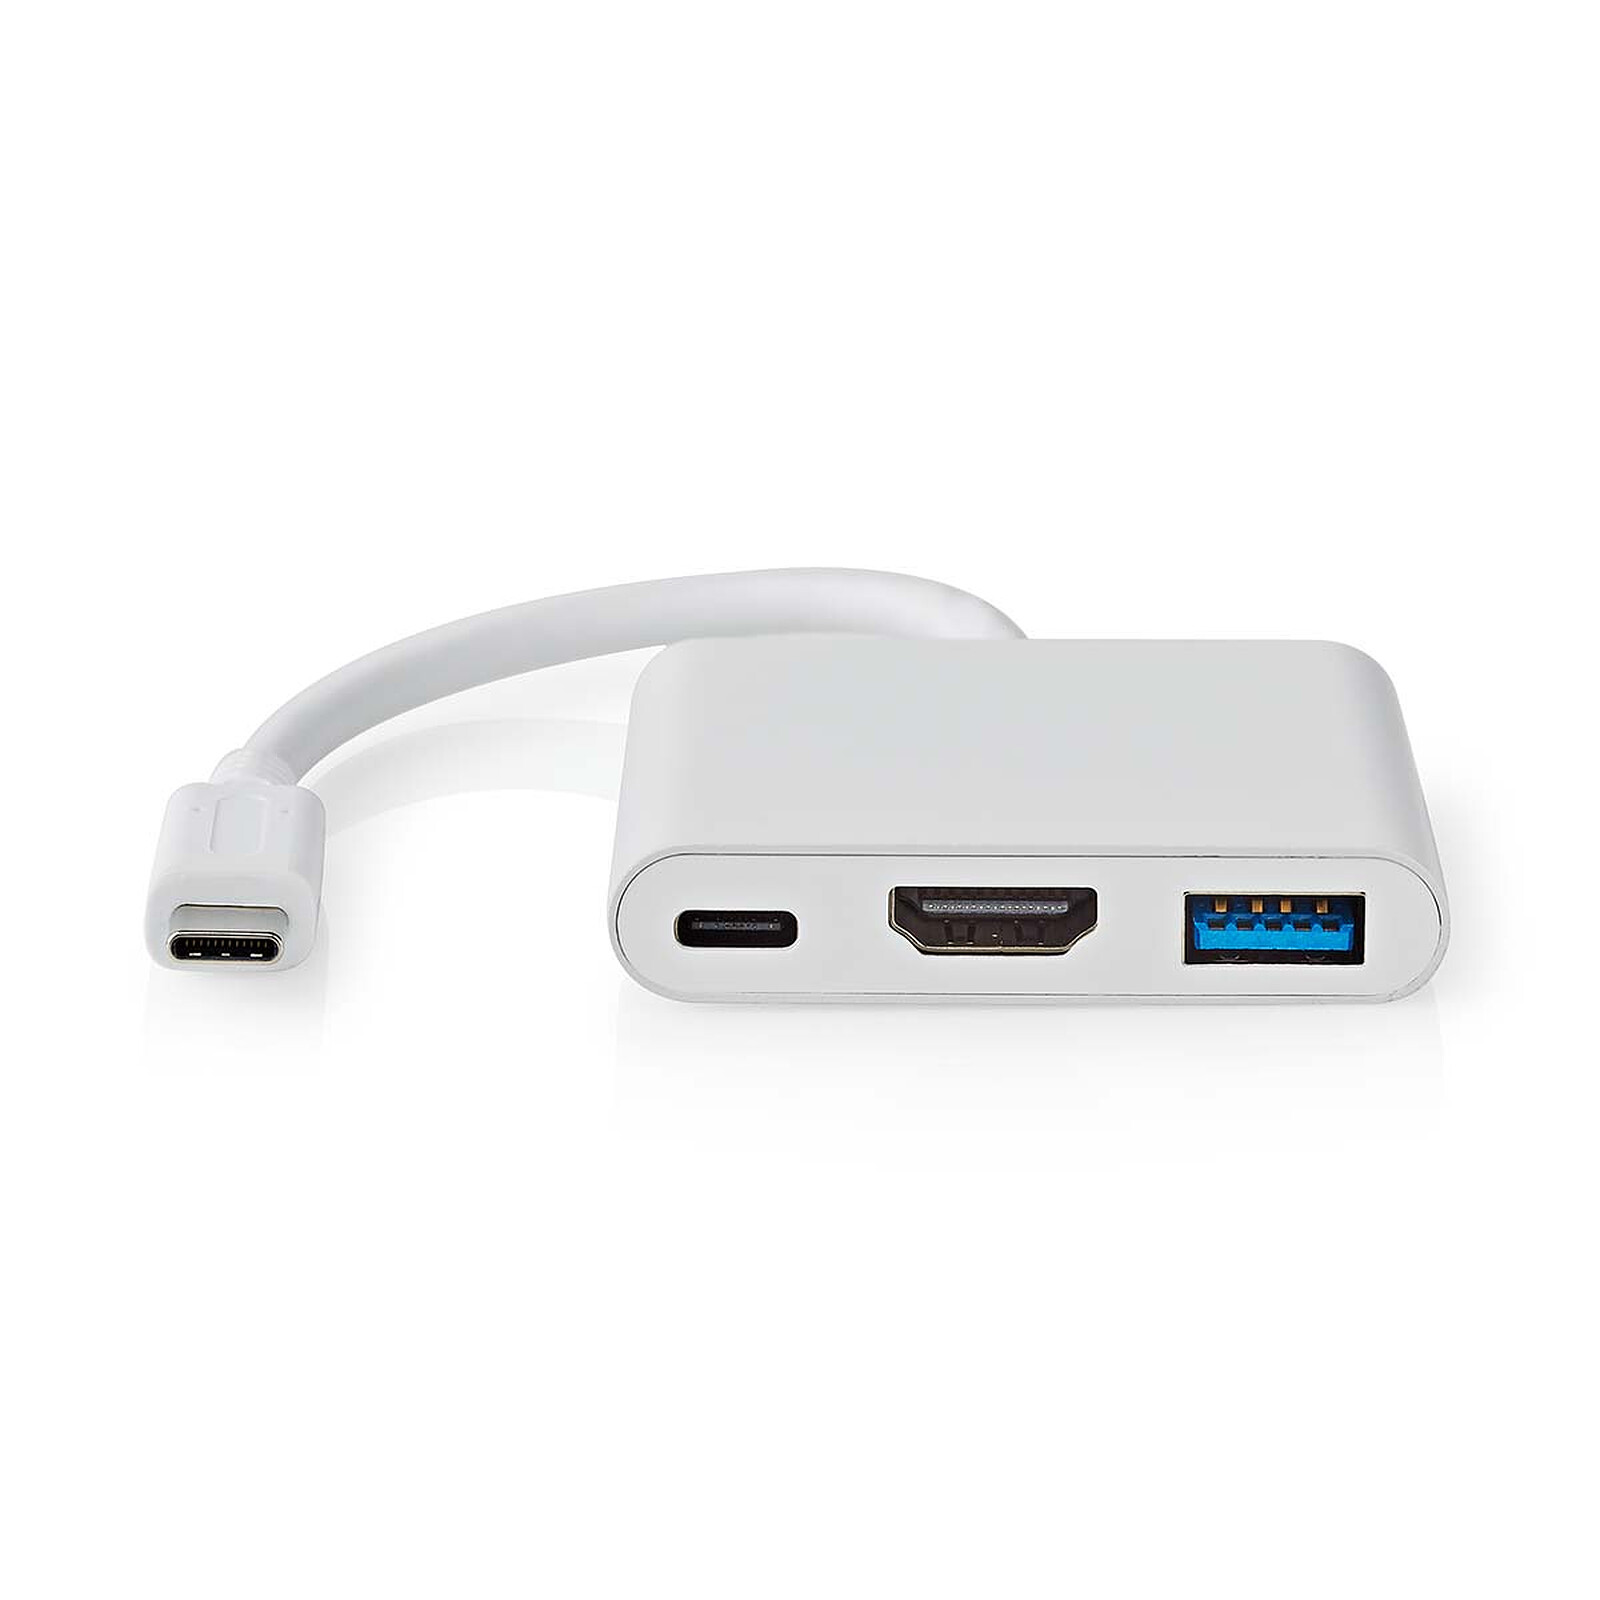 HUB USB vers Adaptateur HDMI Pour Macbook Pro-Air Thunderbolt 3